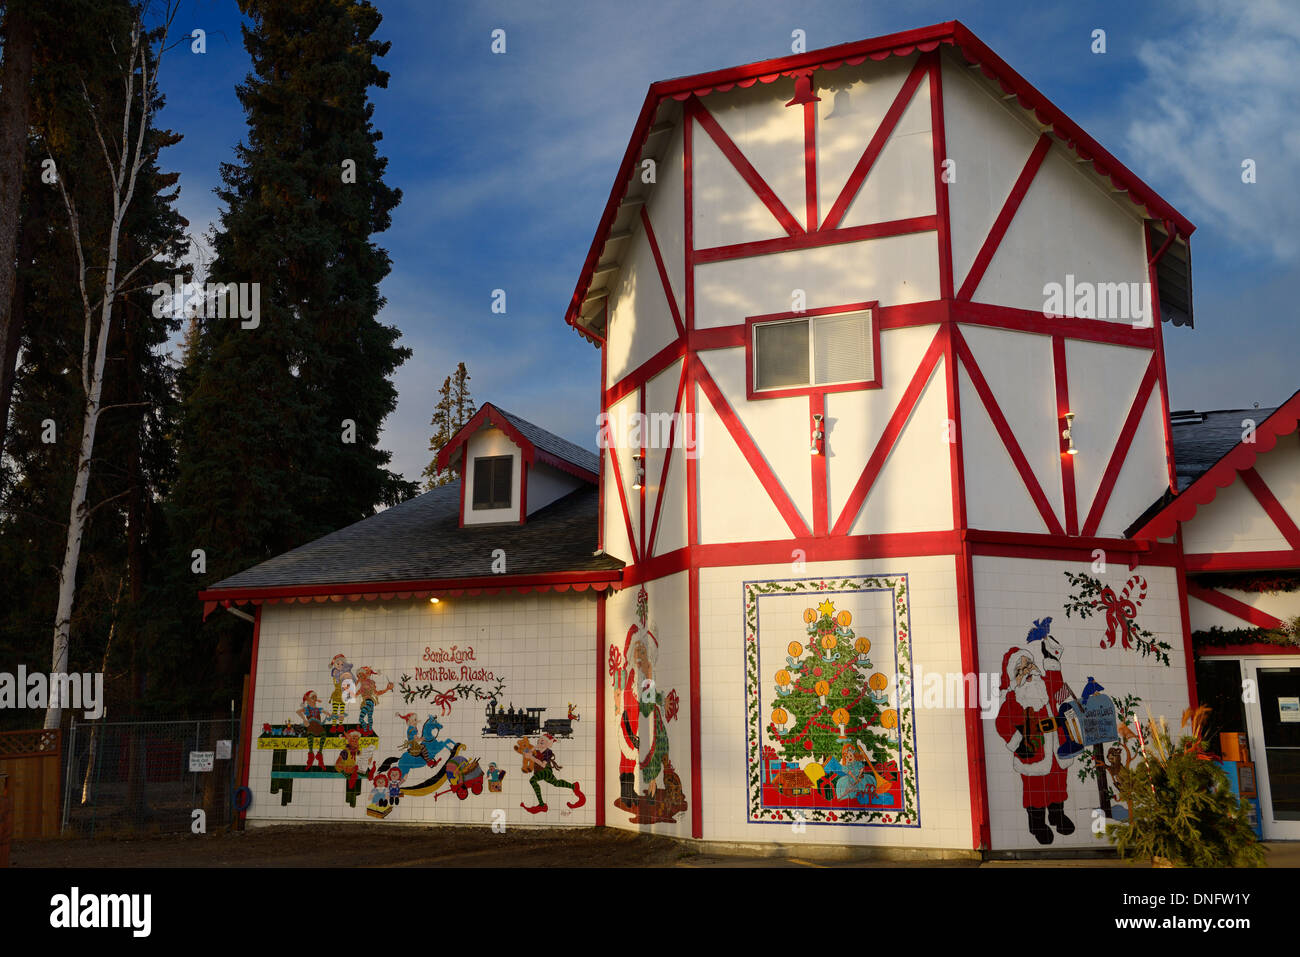 Die santa claus House at santaland Nordpol Alaska usa mit Weihnachten Szene Fliesen Stockfoto